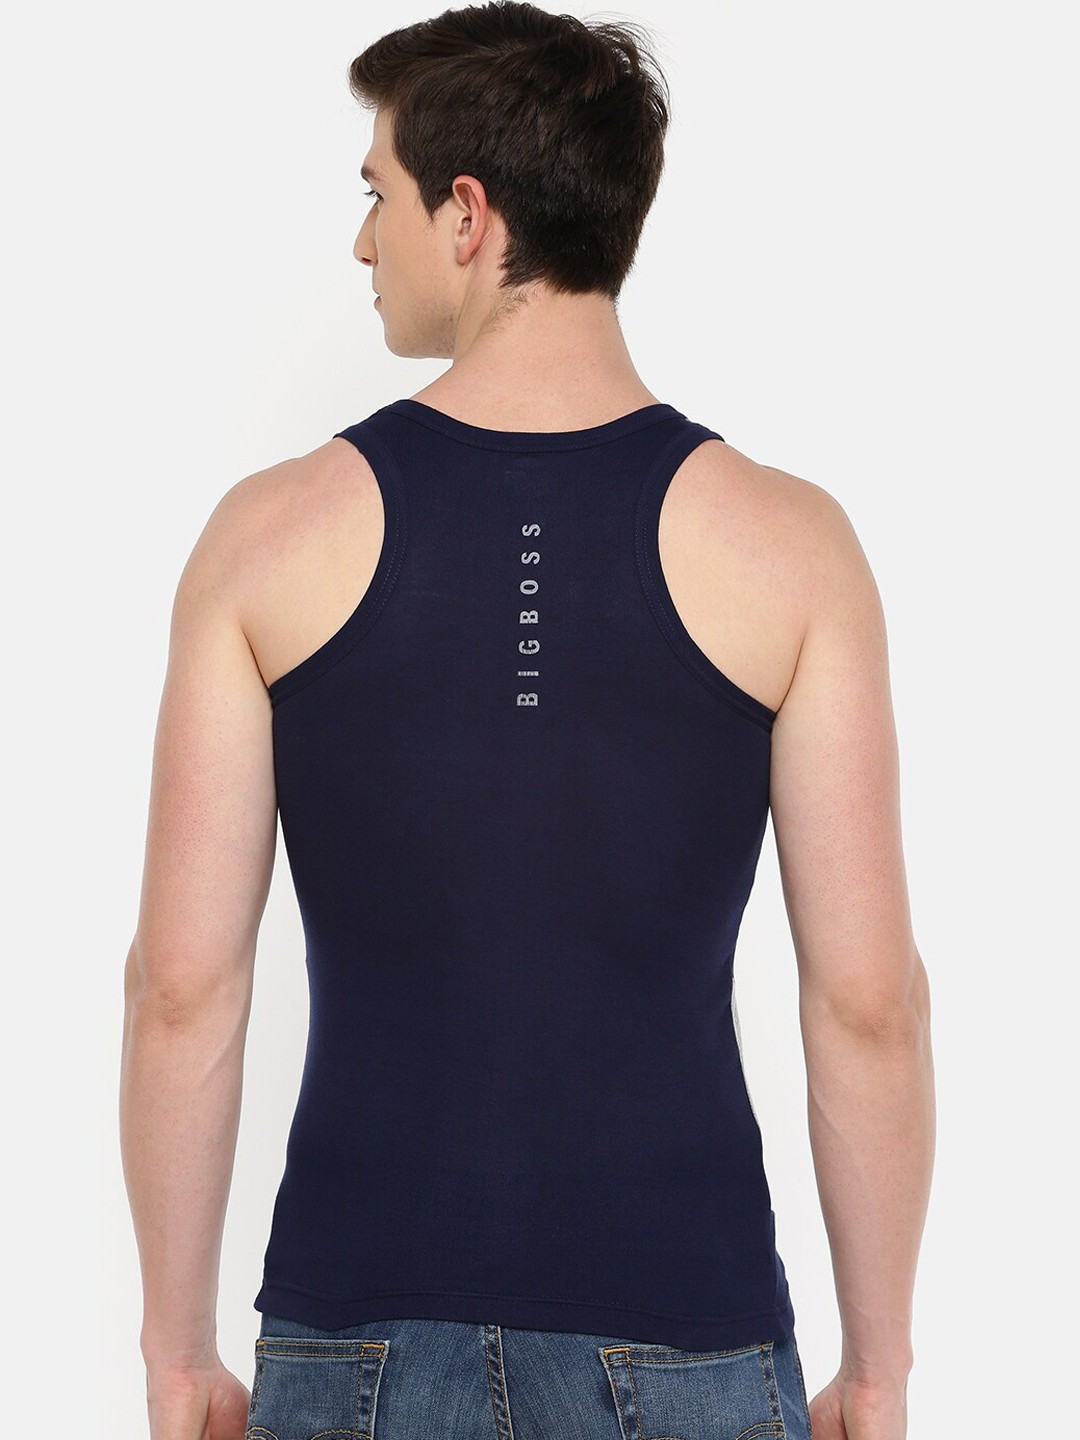 Clothing Innerwear Vests | Dollar Bigboss Men Pack Of 2 Assorted Cotton Gym Vests - KB45072